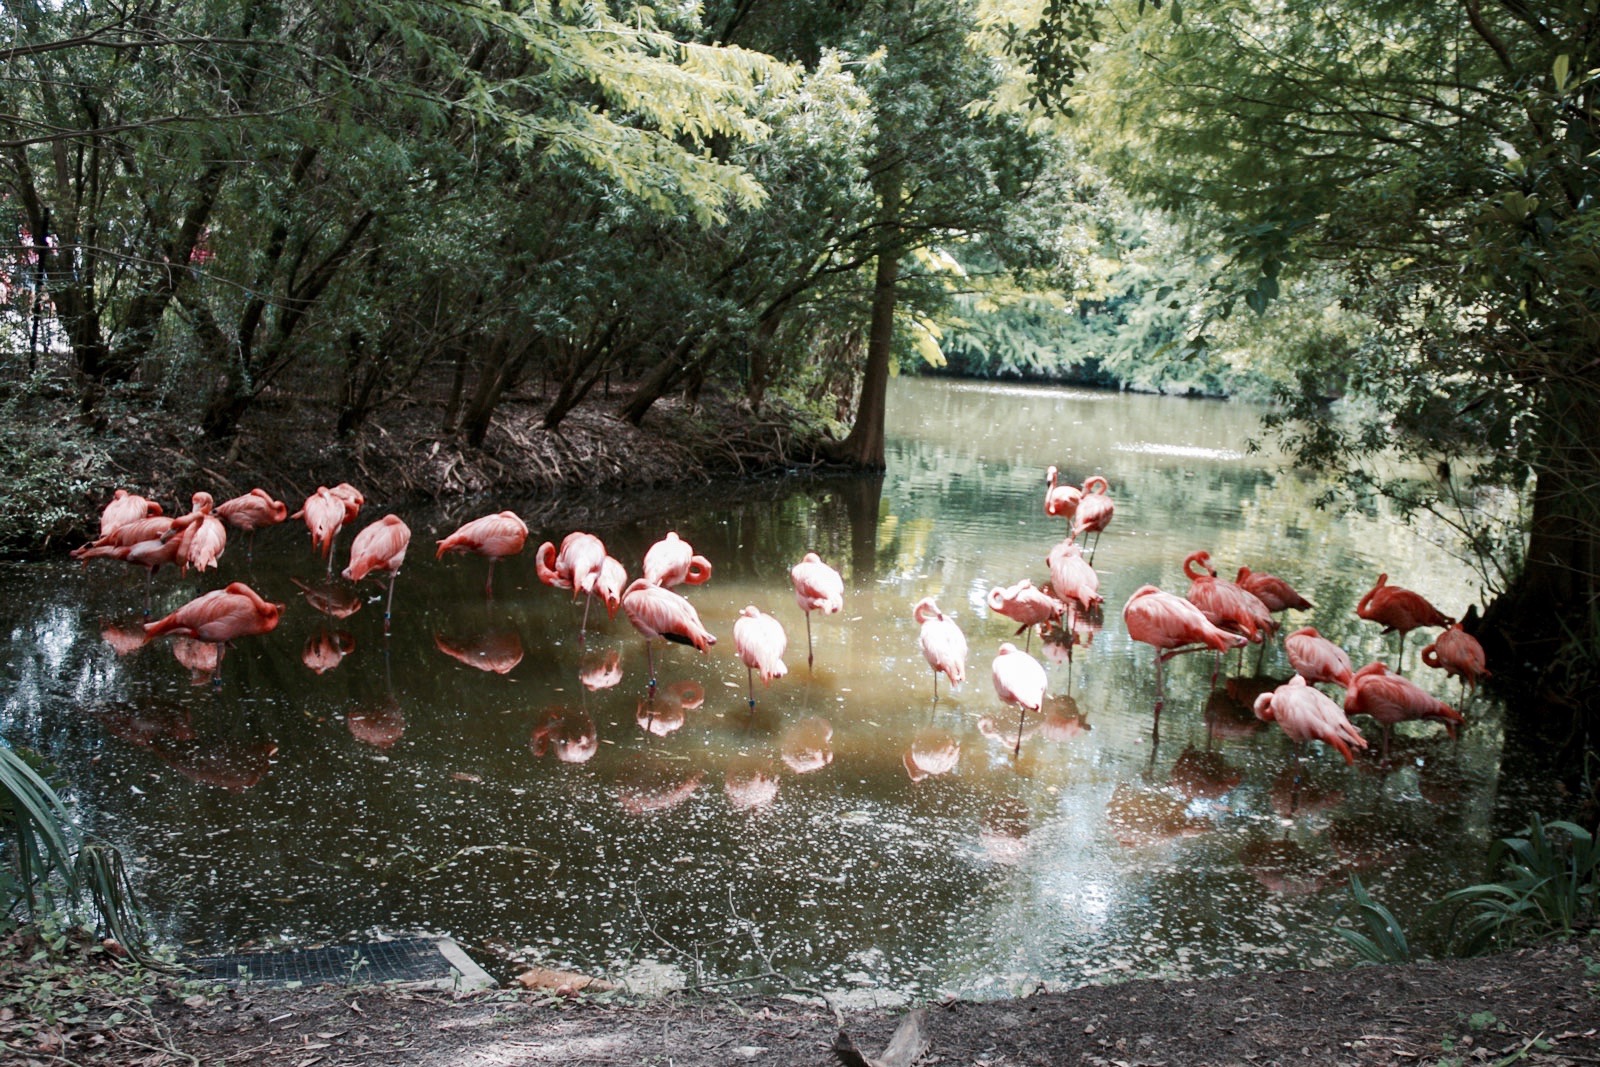 Flamingos at the Jacksonville Zoo